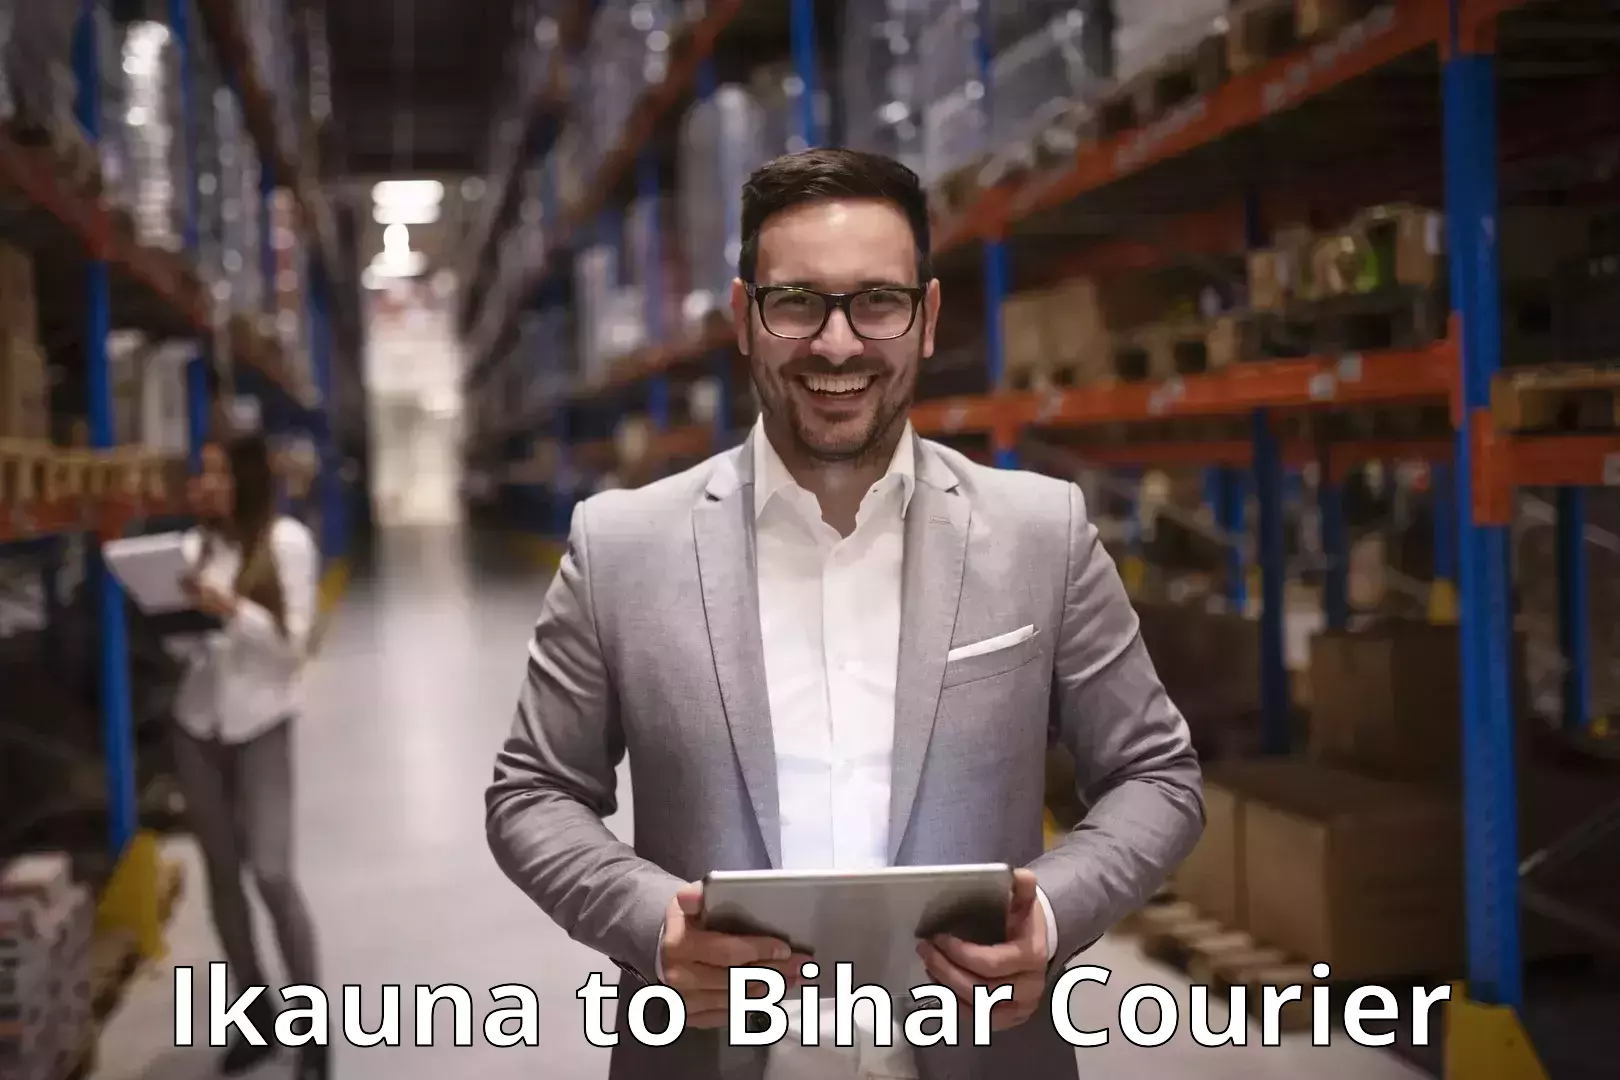 Digital courier platforms Ikauna to Bihar